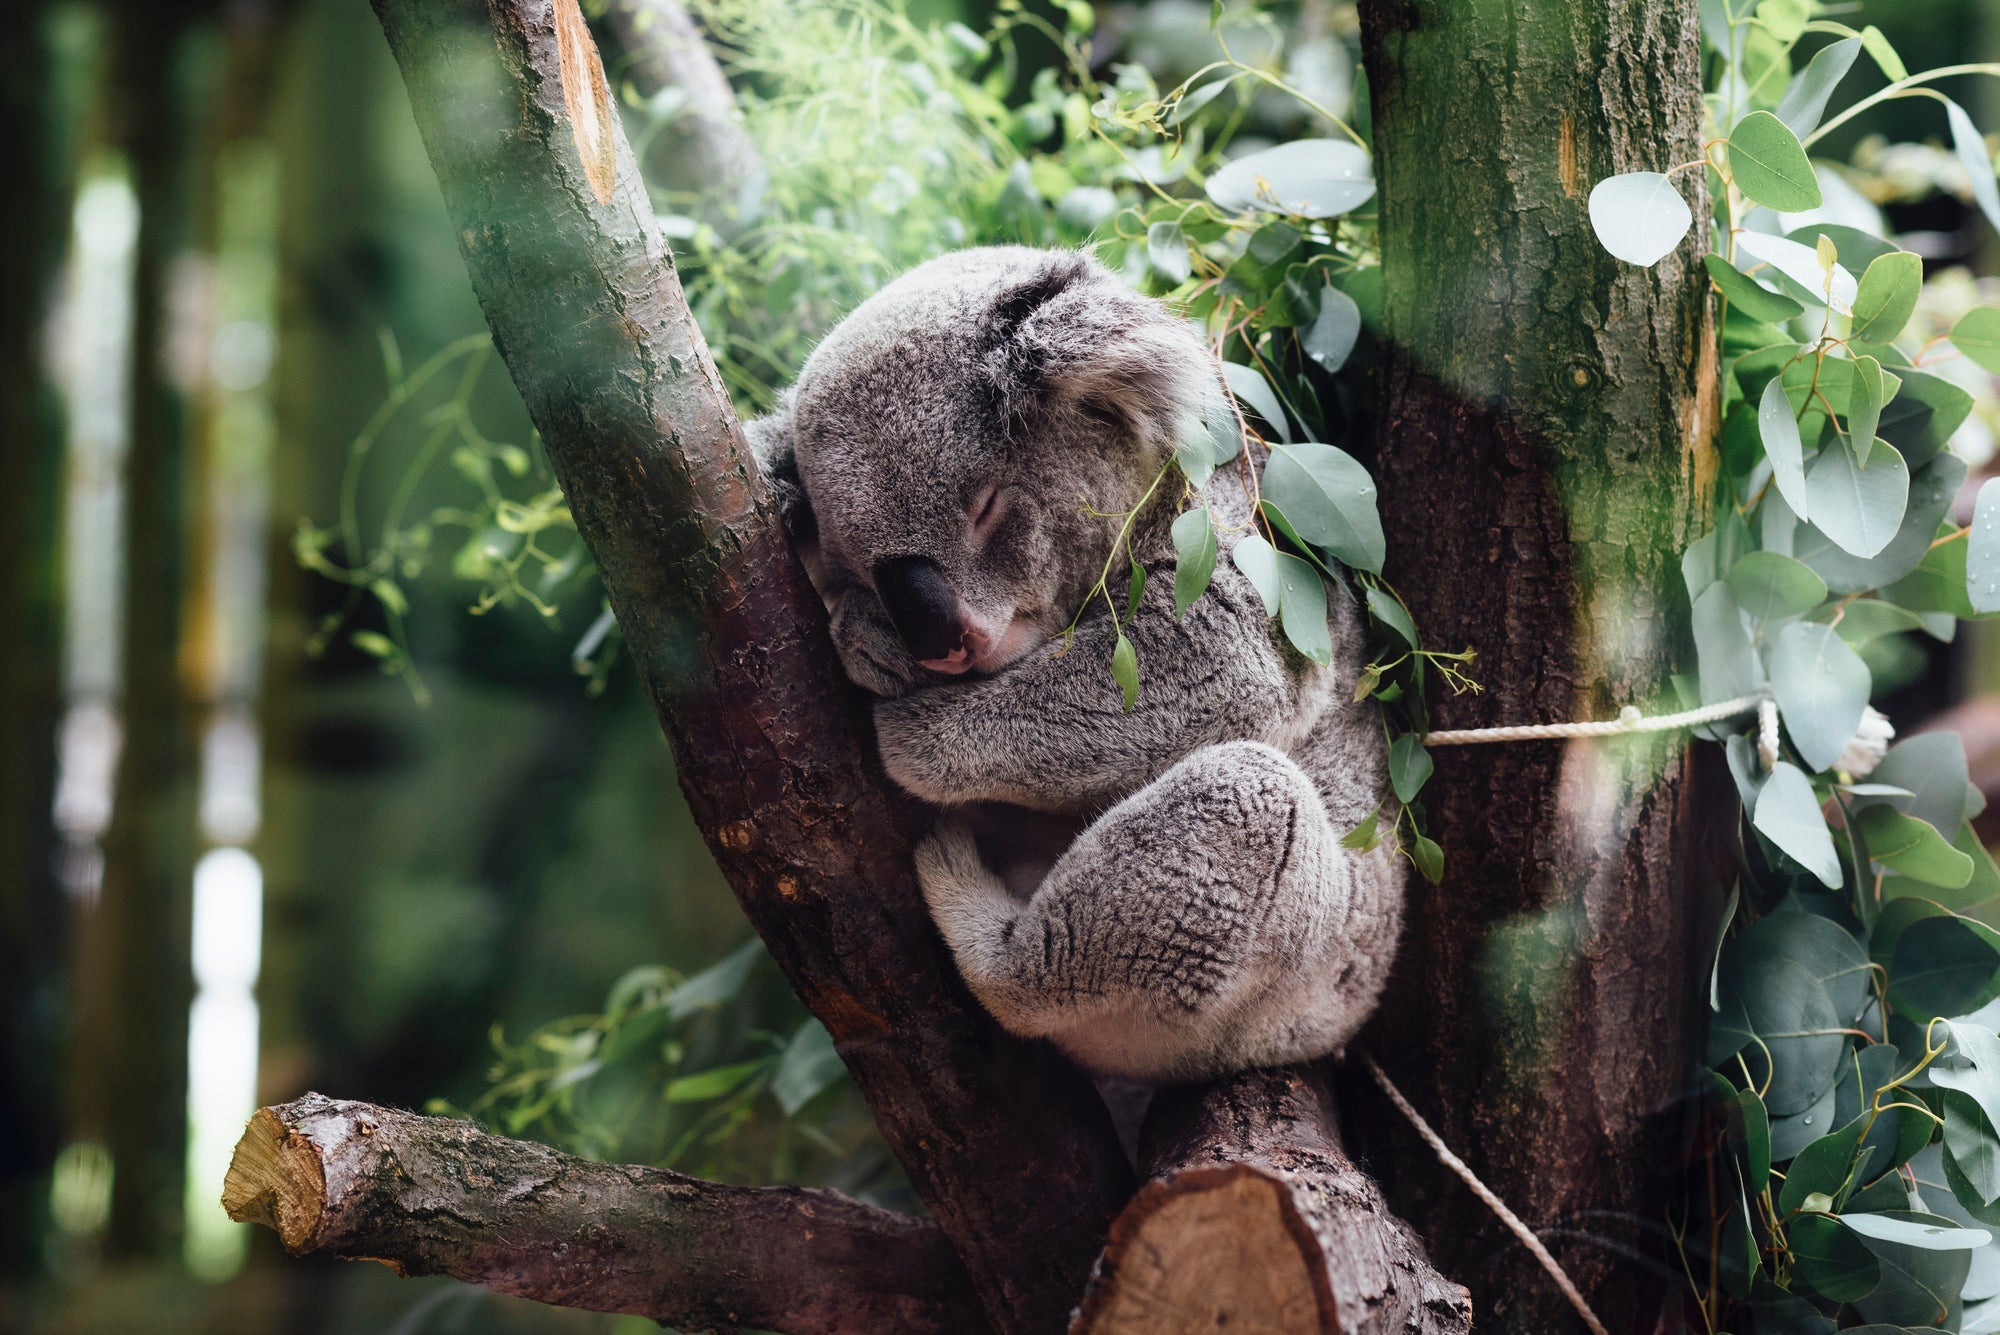 Koala sleeping in a tree, for a Koala adoption